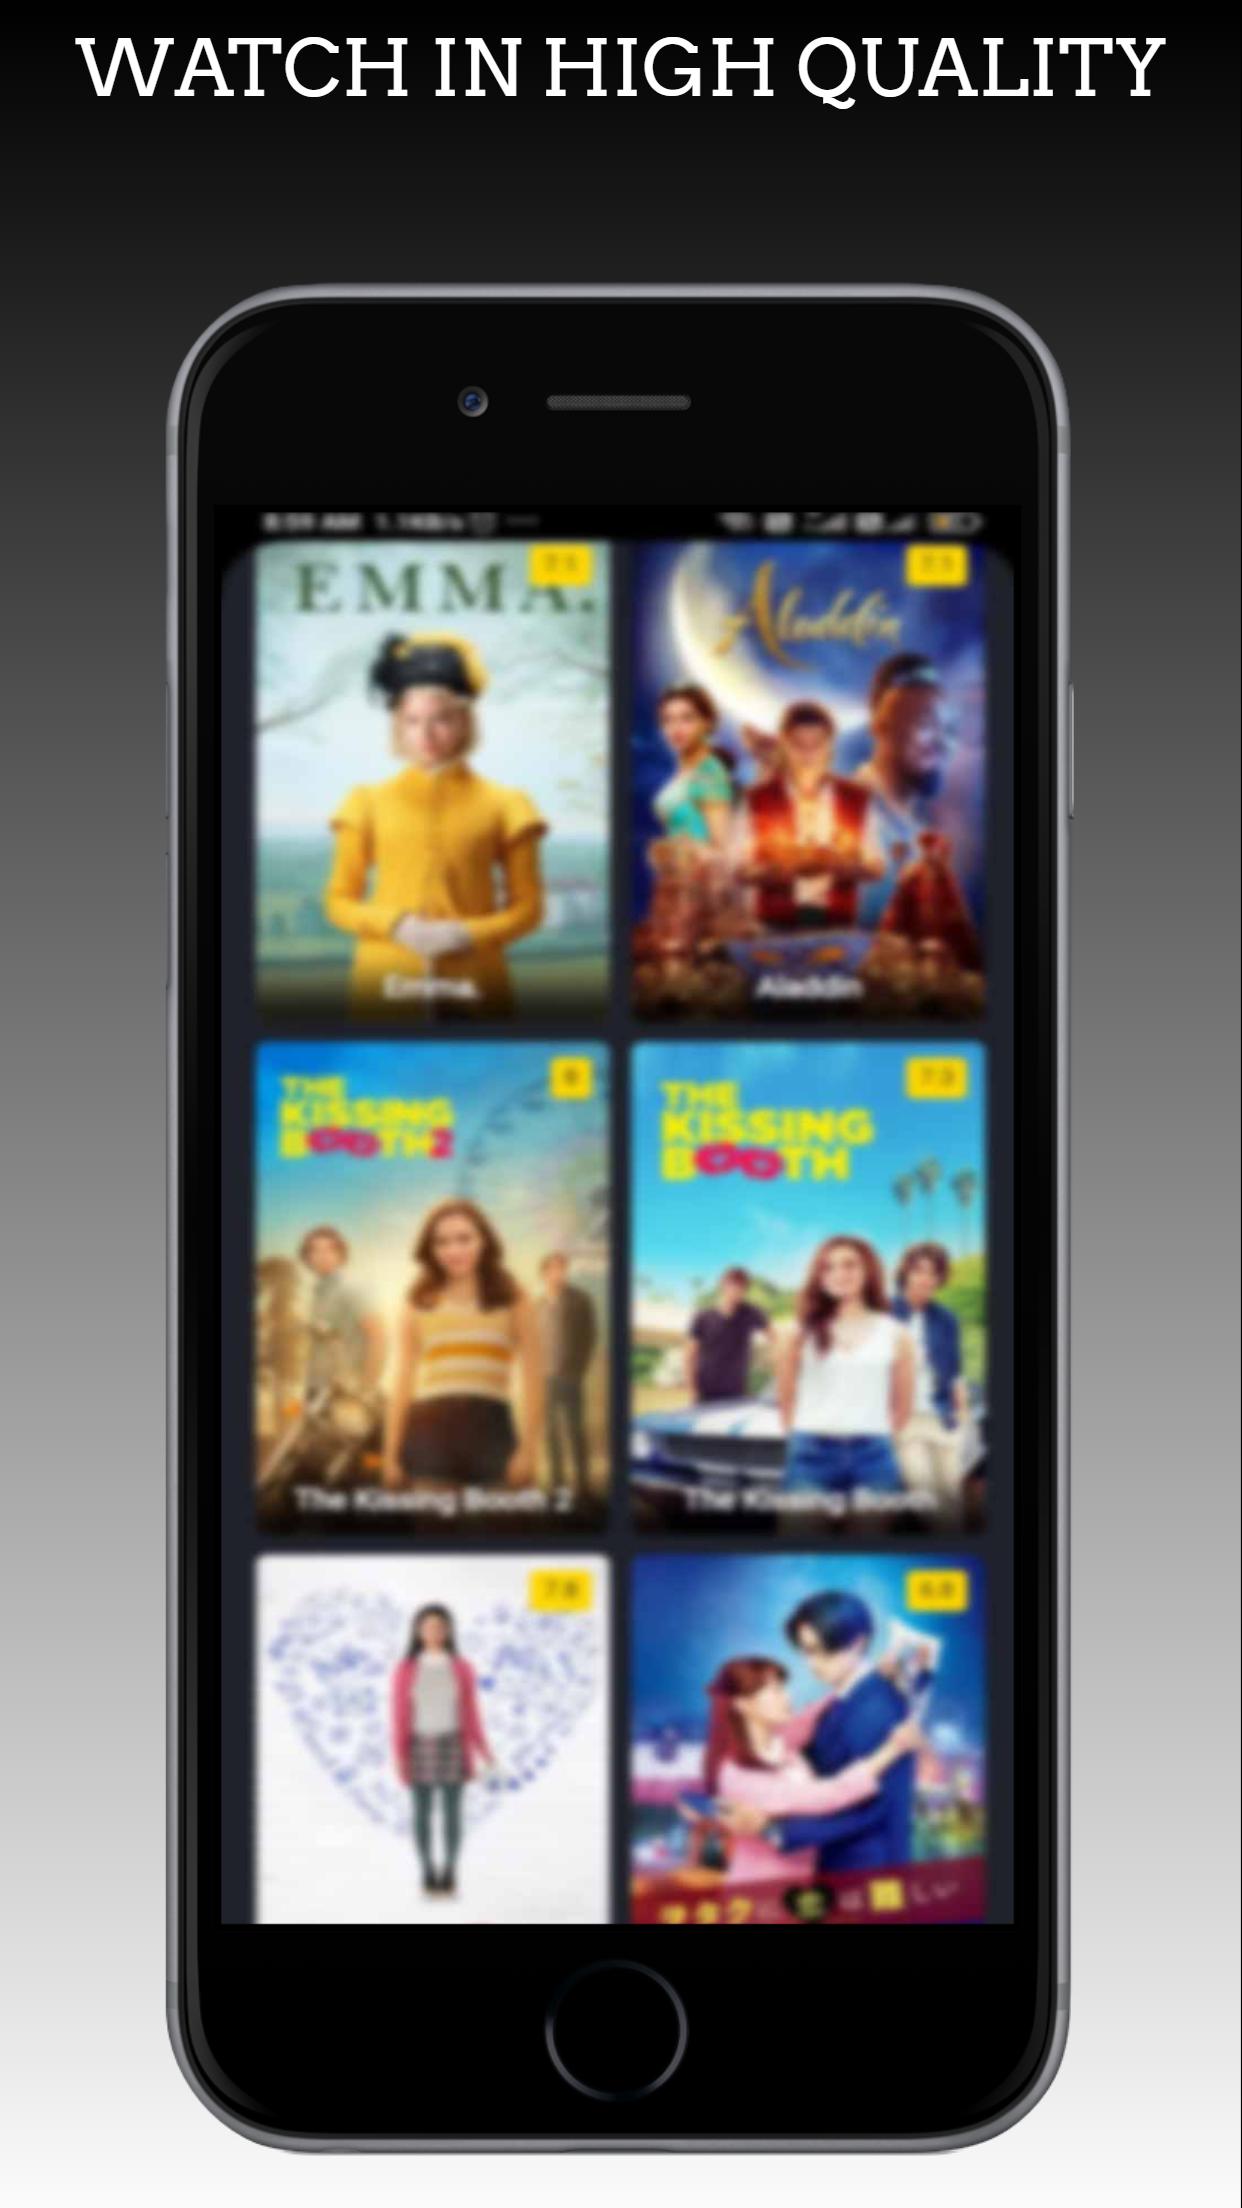 Mediabox hd free movies